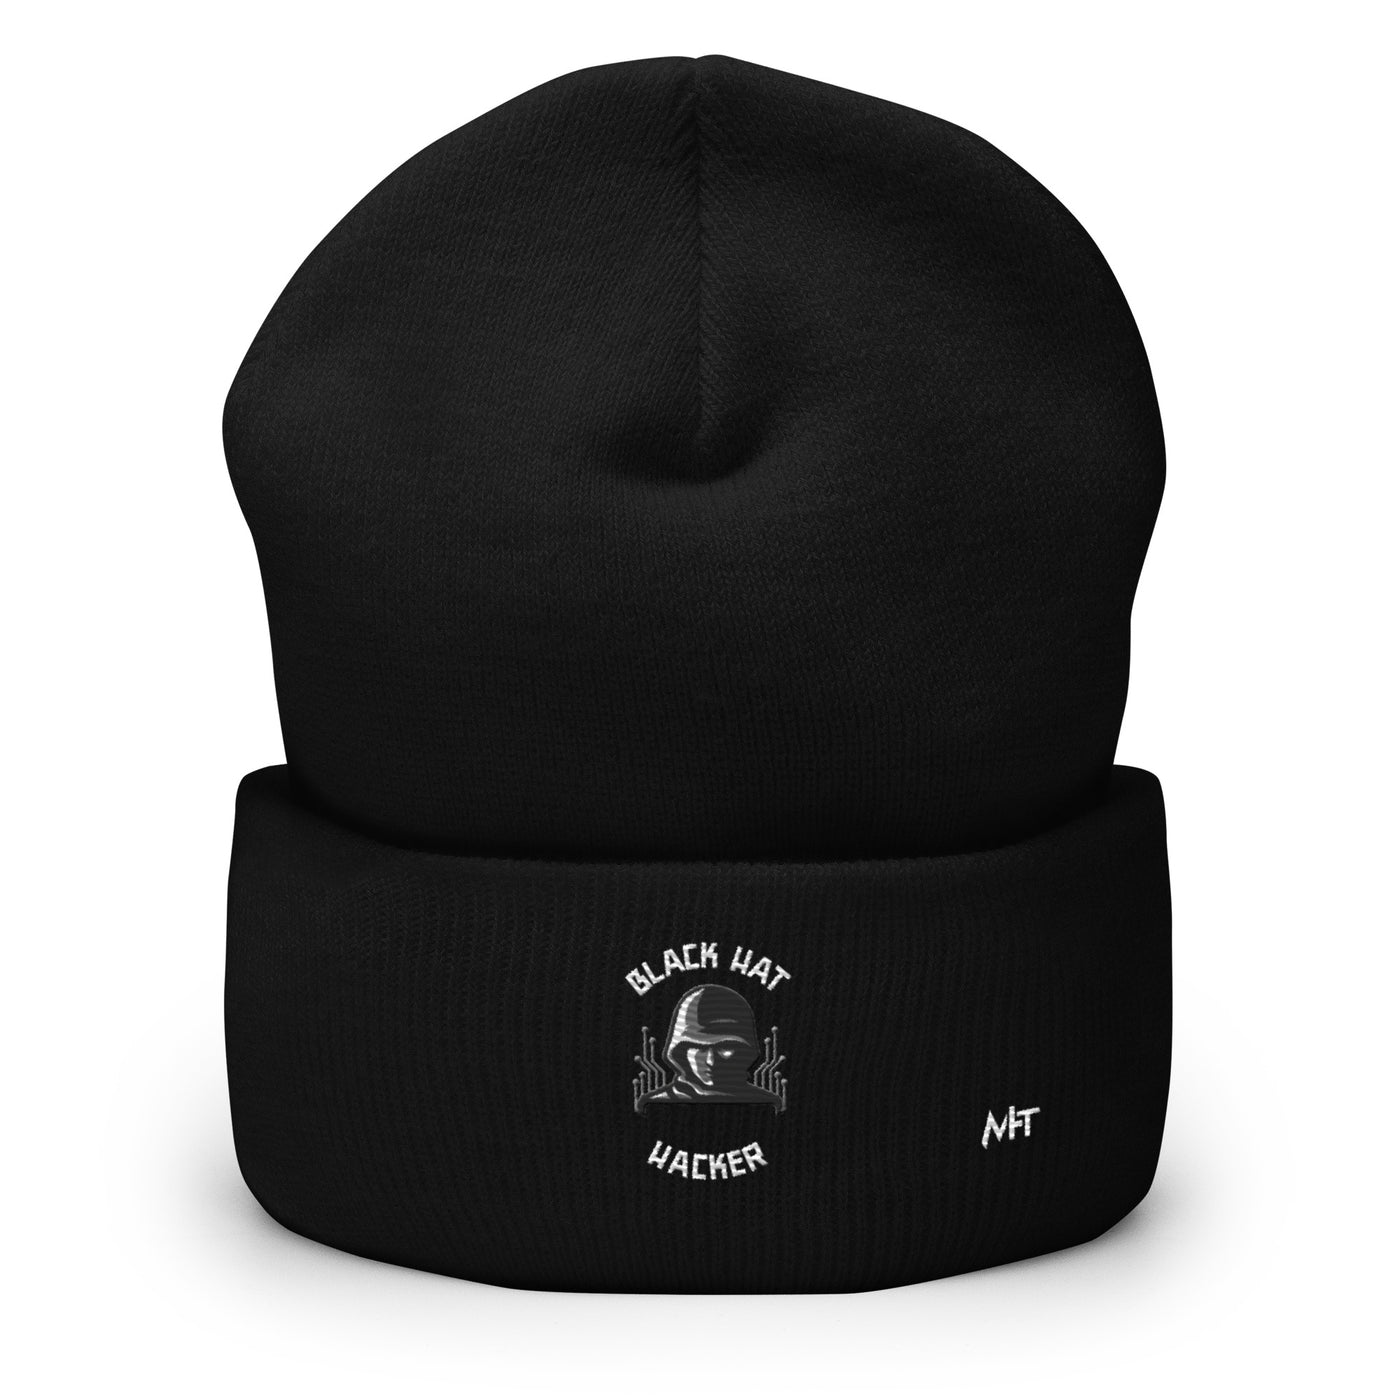 Black Hat Hacker - Cuffed Beanie